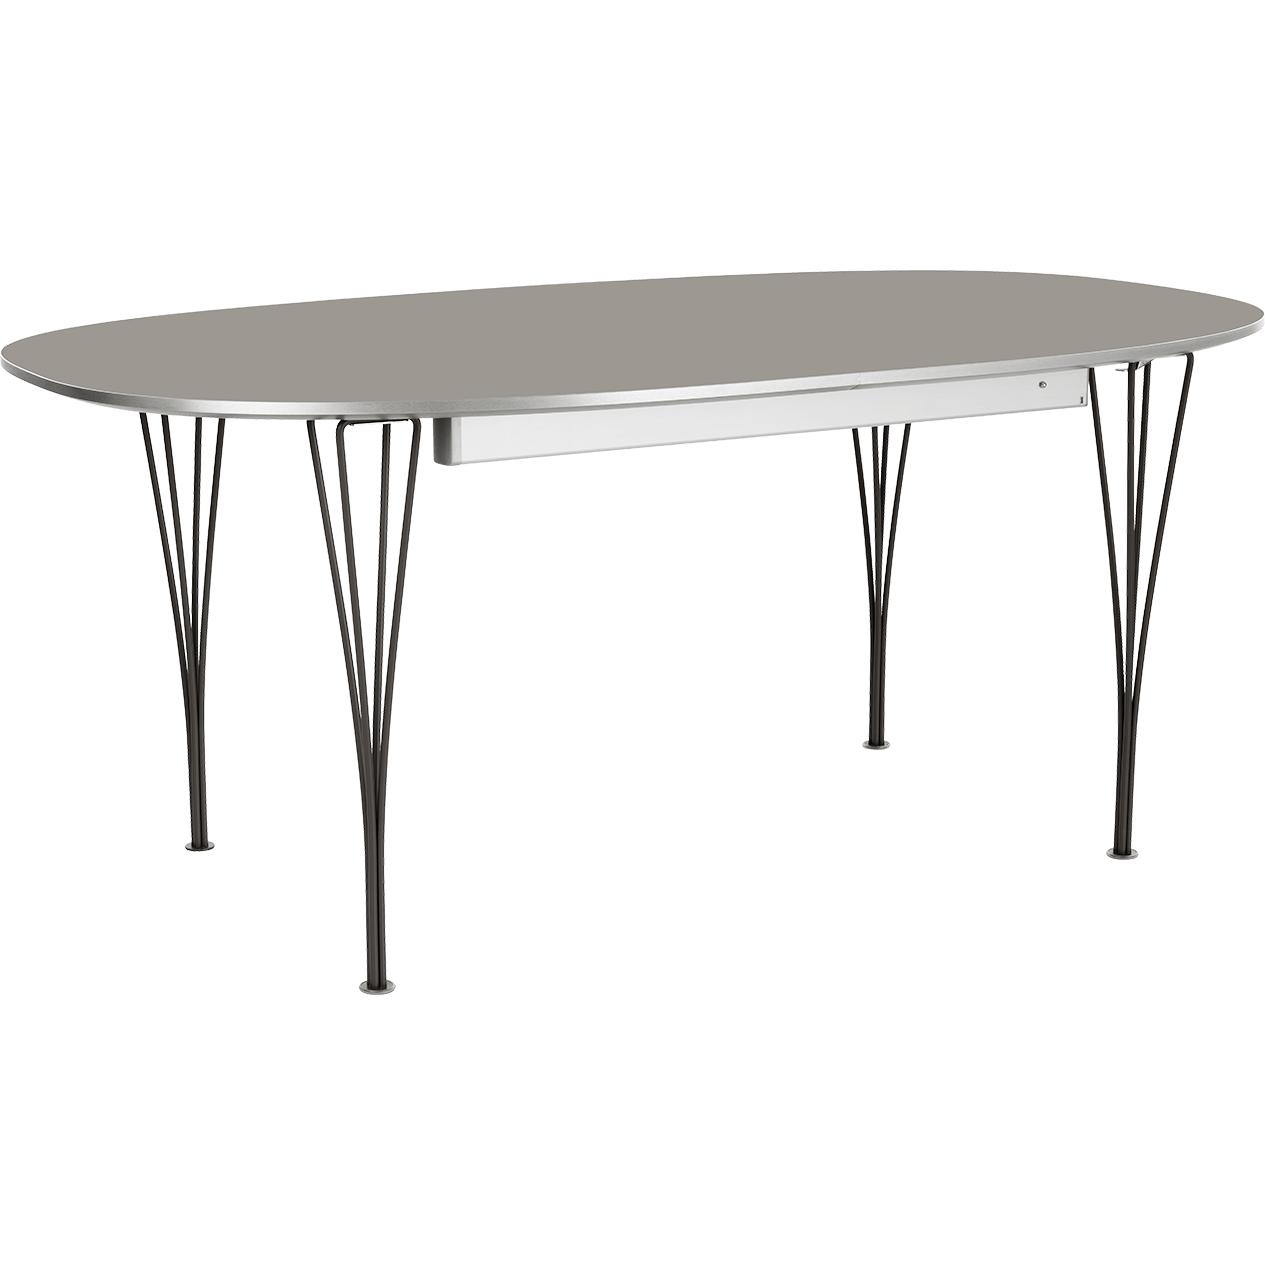 Fritz Hansen Super ellipse utdragbart bord lackerade 120 x180/300 cm, grå laminat